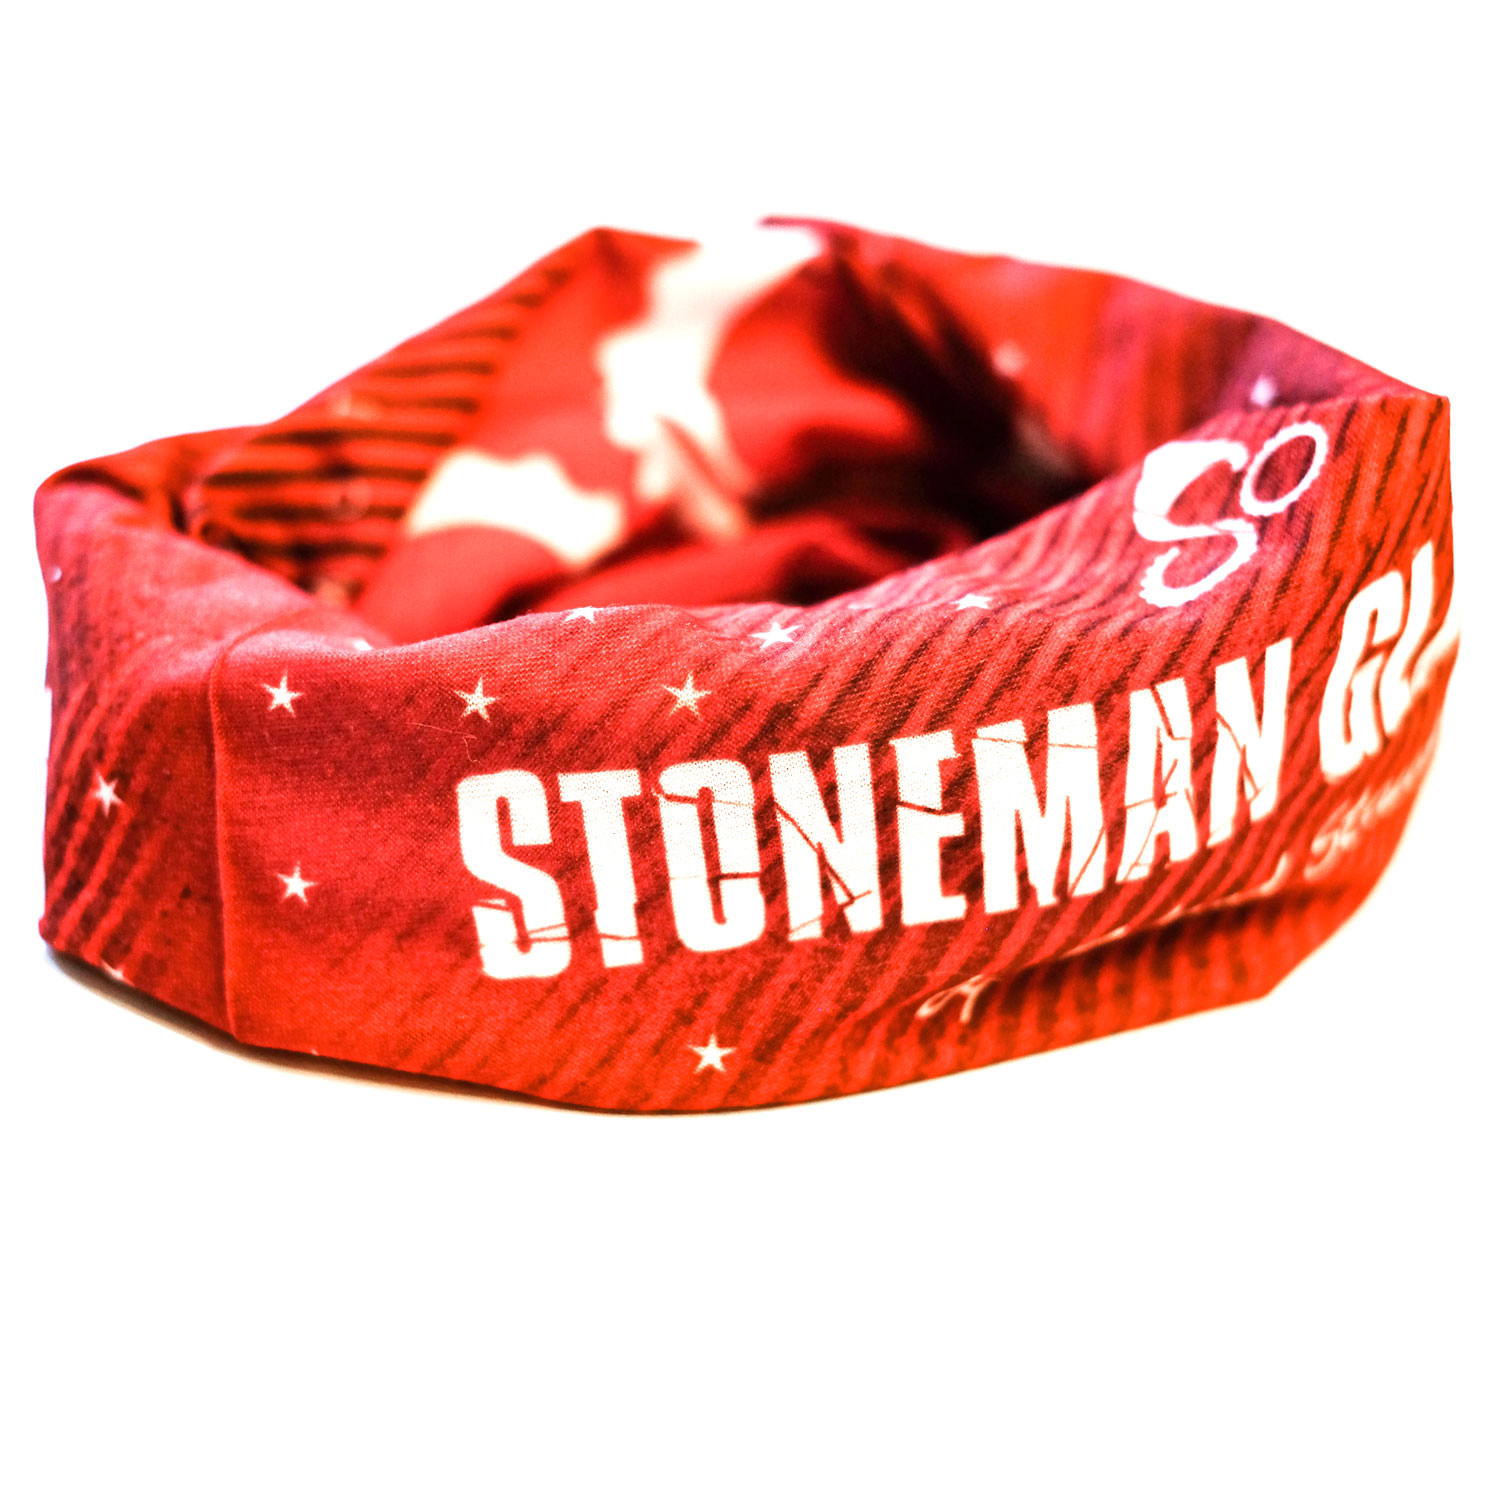 Productfoto van Stoneman Hero Multifunctional Cloth - Glaciara